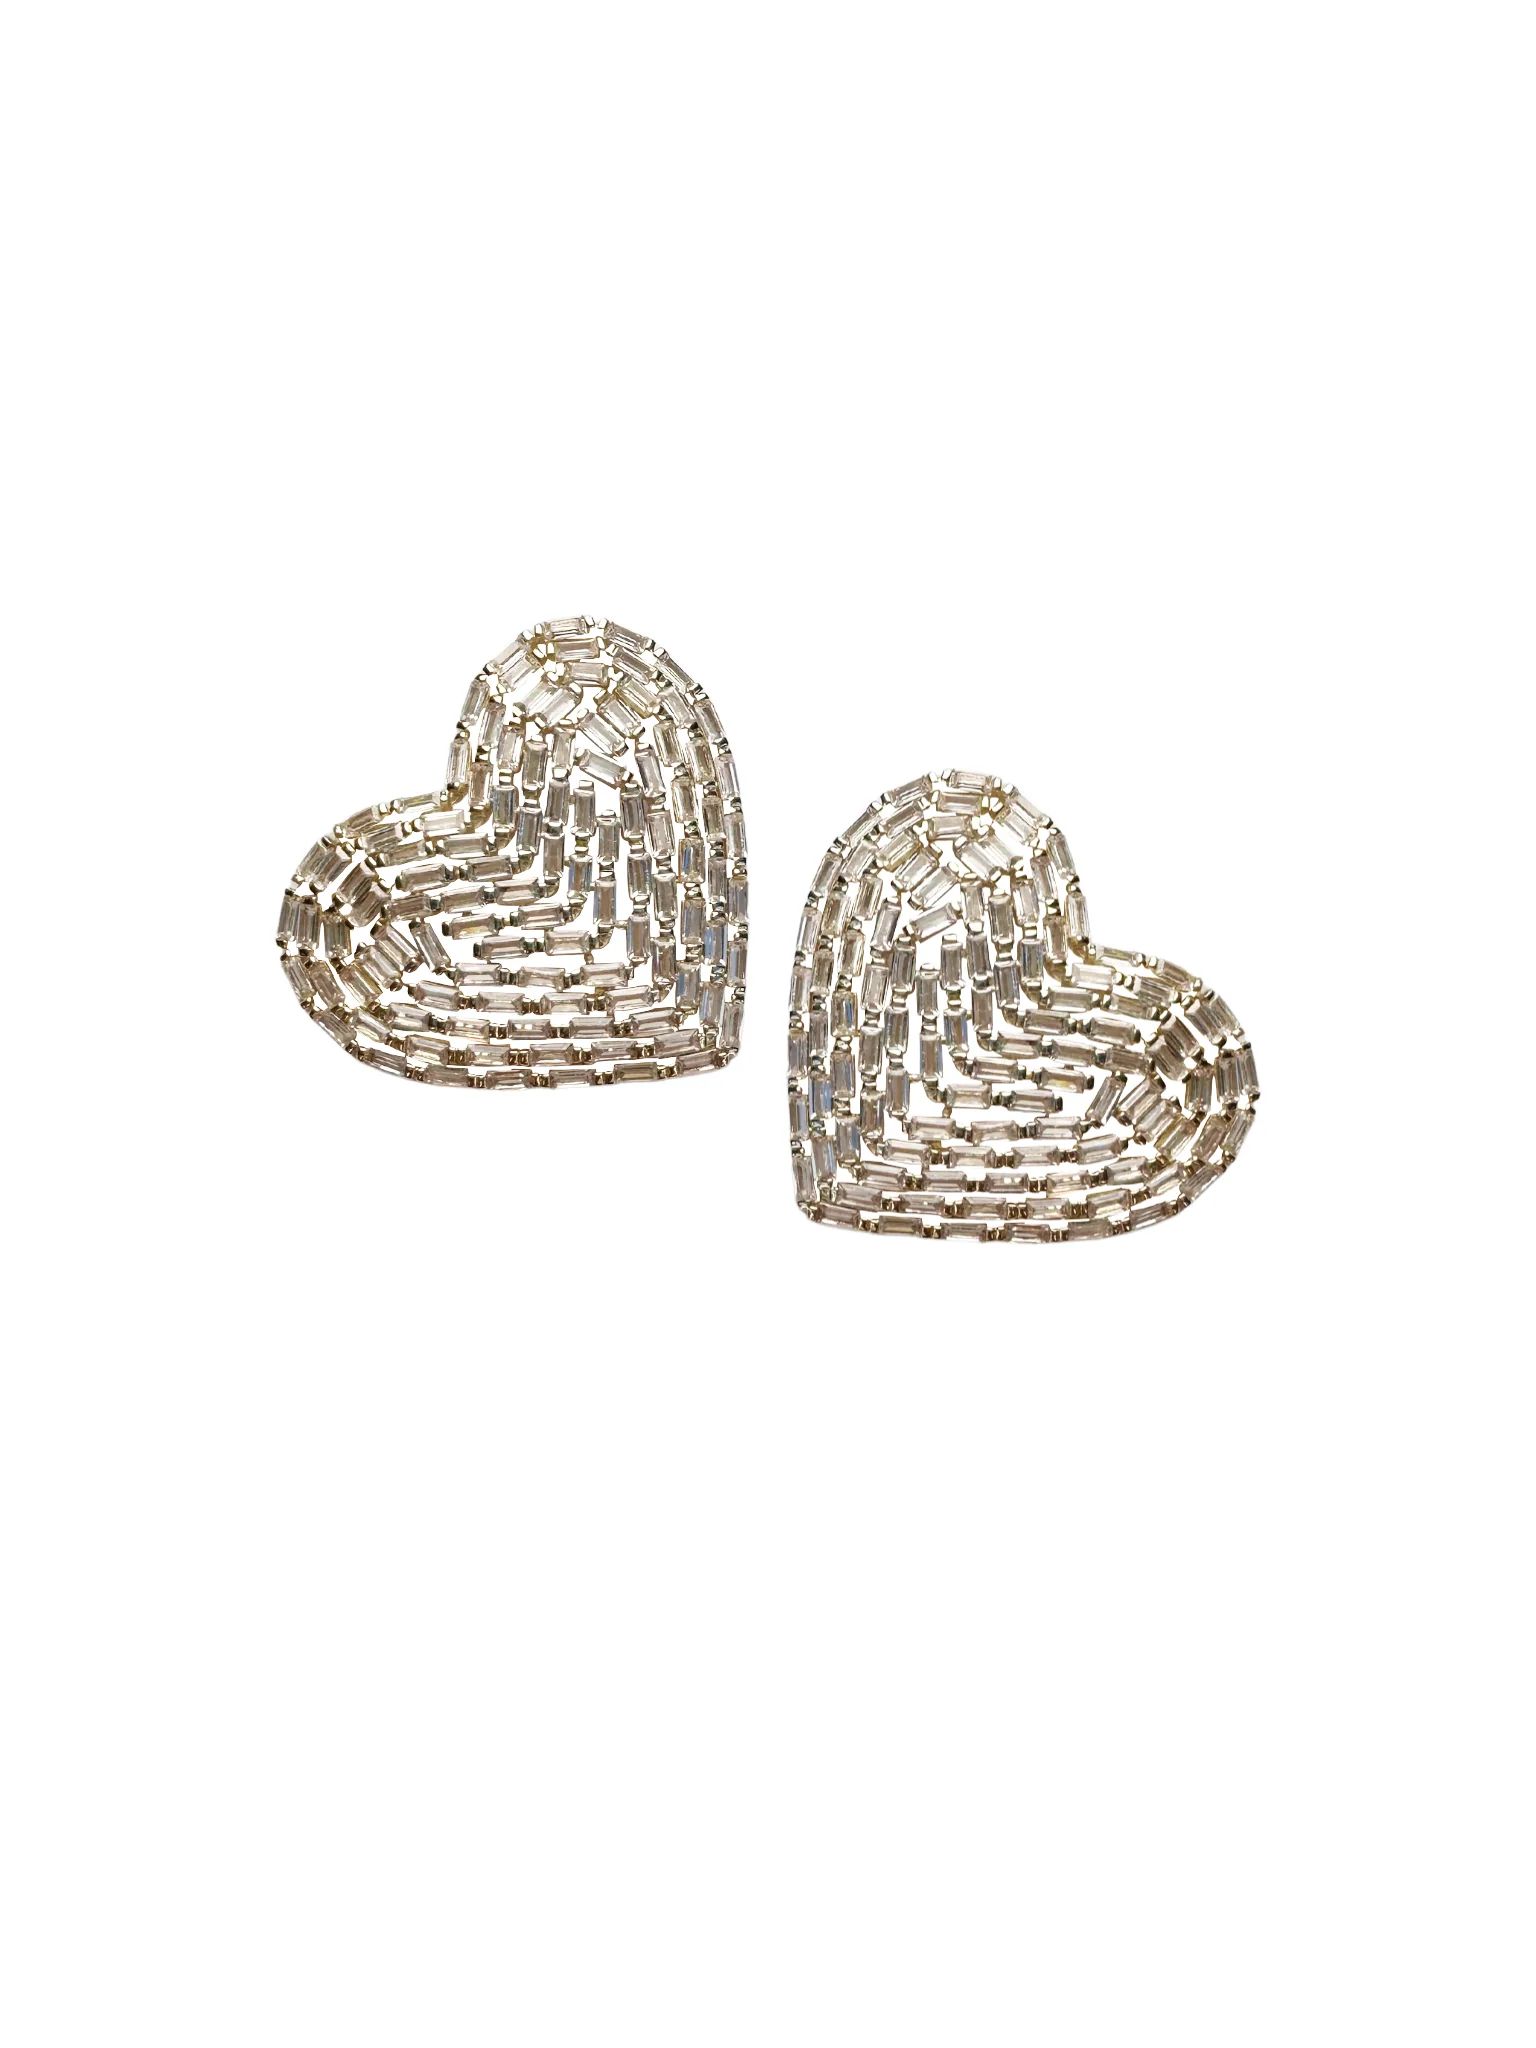 Embellished Heart | Nicola Bathie Jewelry